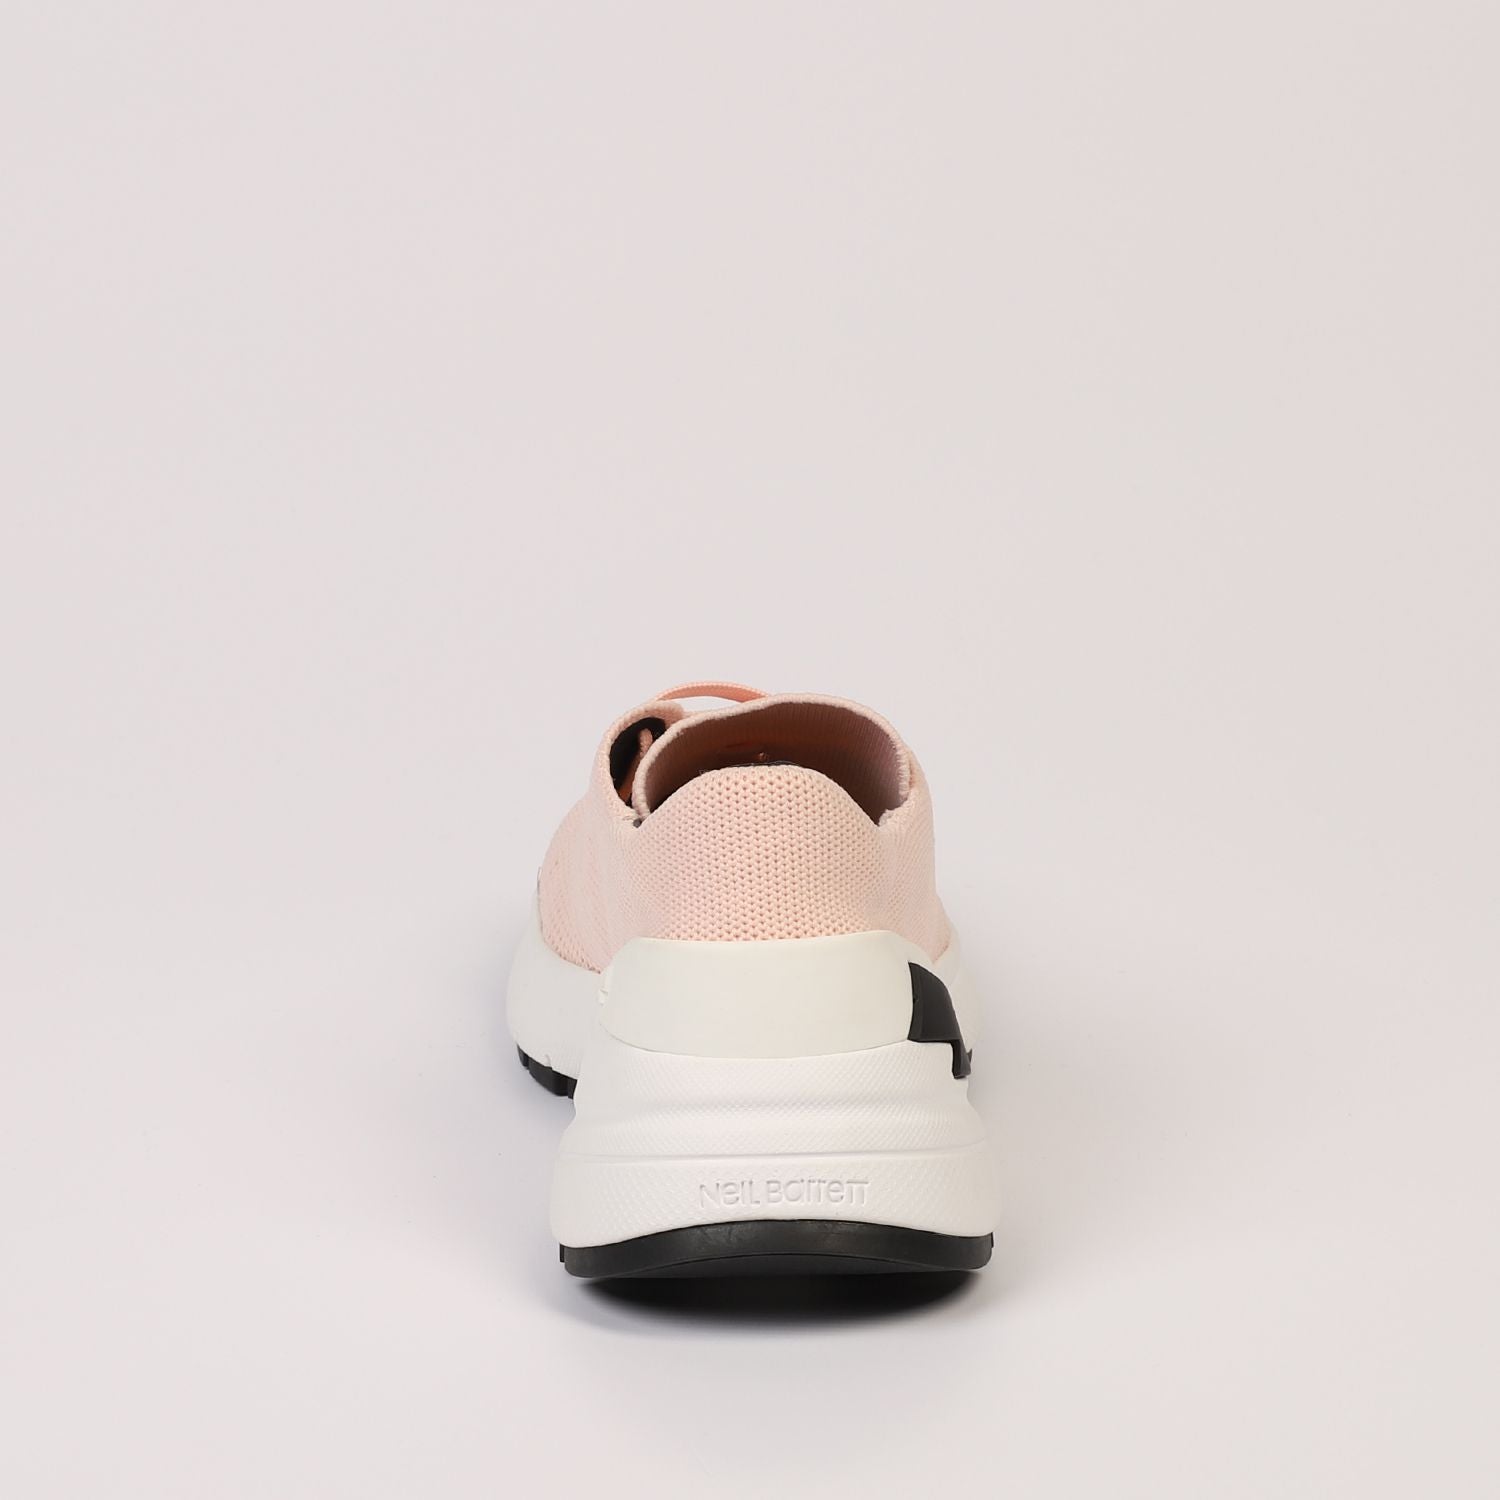 Neil Barrett Pink Textile and Leather Sneaker - Fizigo